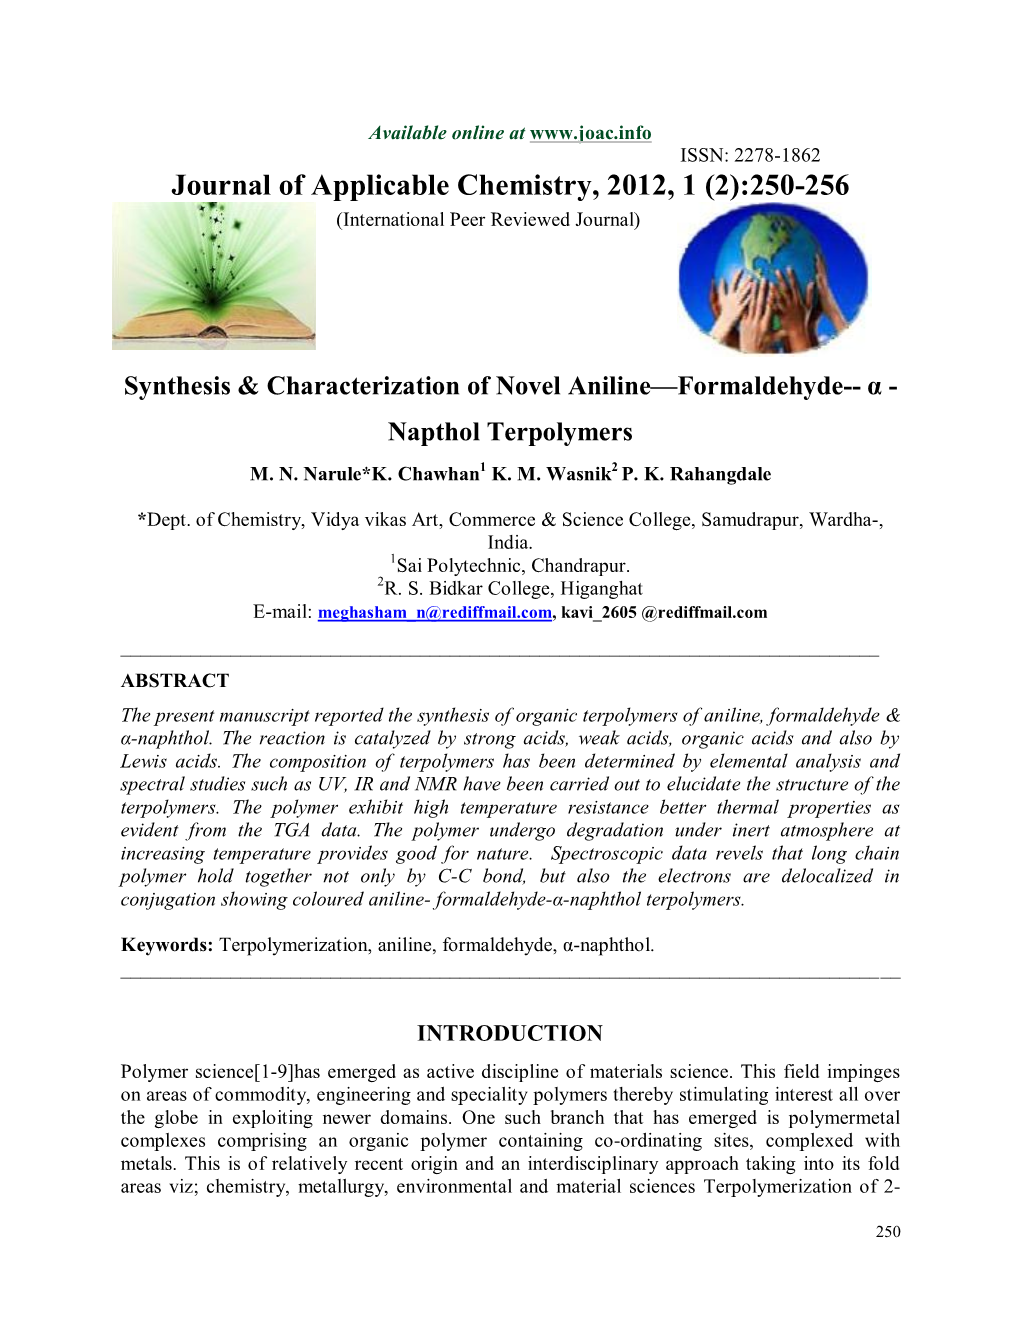 Journal of Applicable Chemistry, 2012, 1 (2):250-256 (International Peer Reviewed Journal)